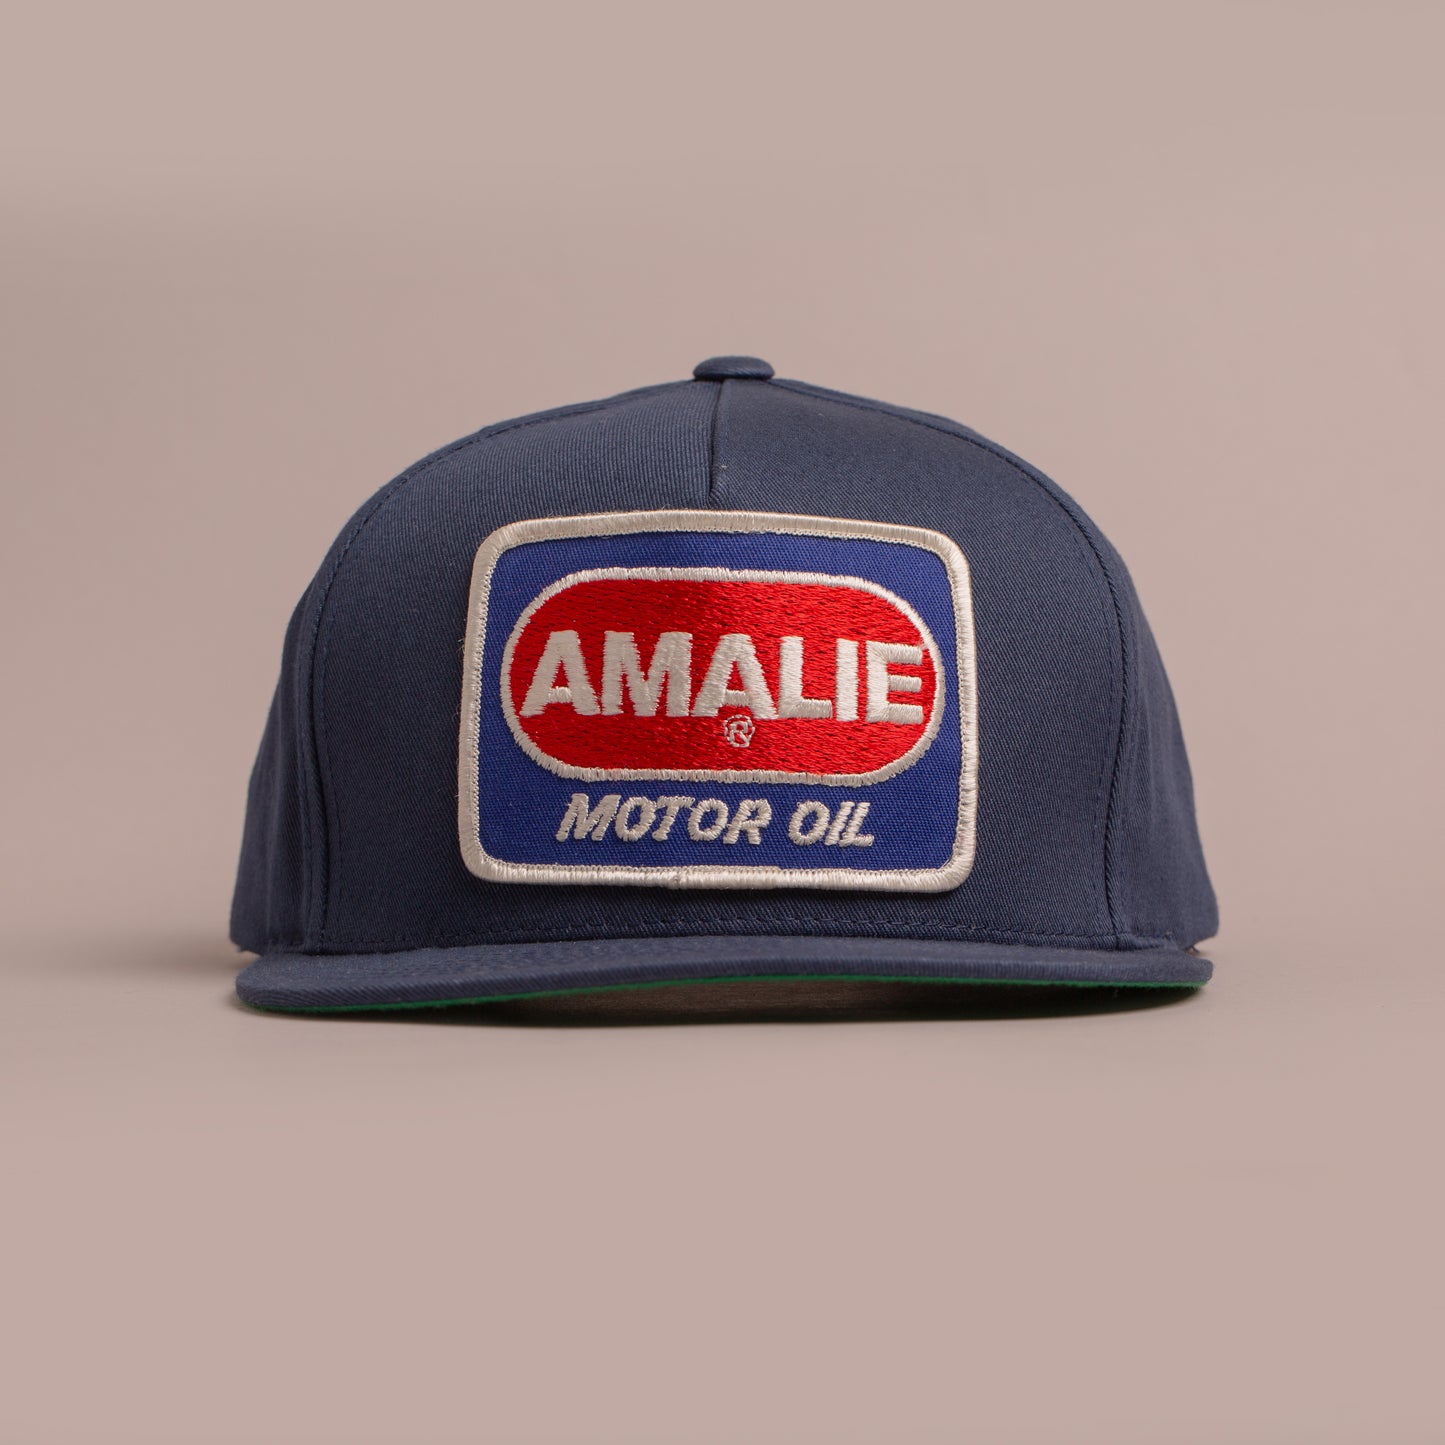 Amalie Motor Oil